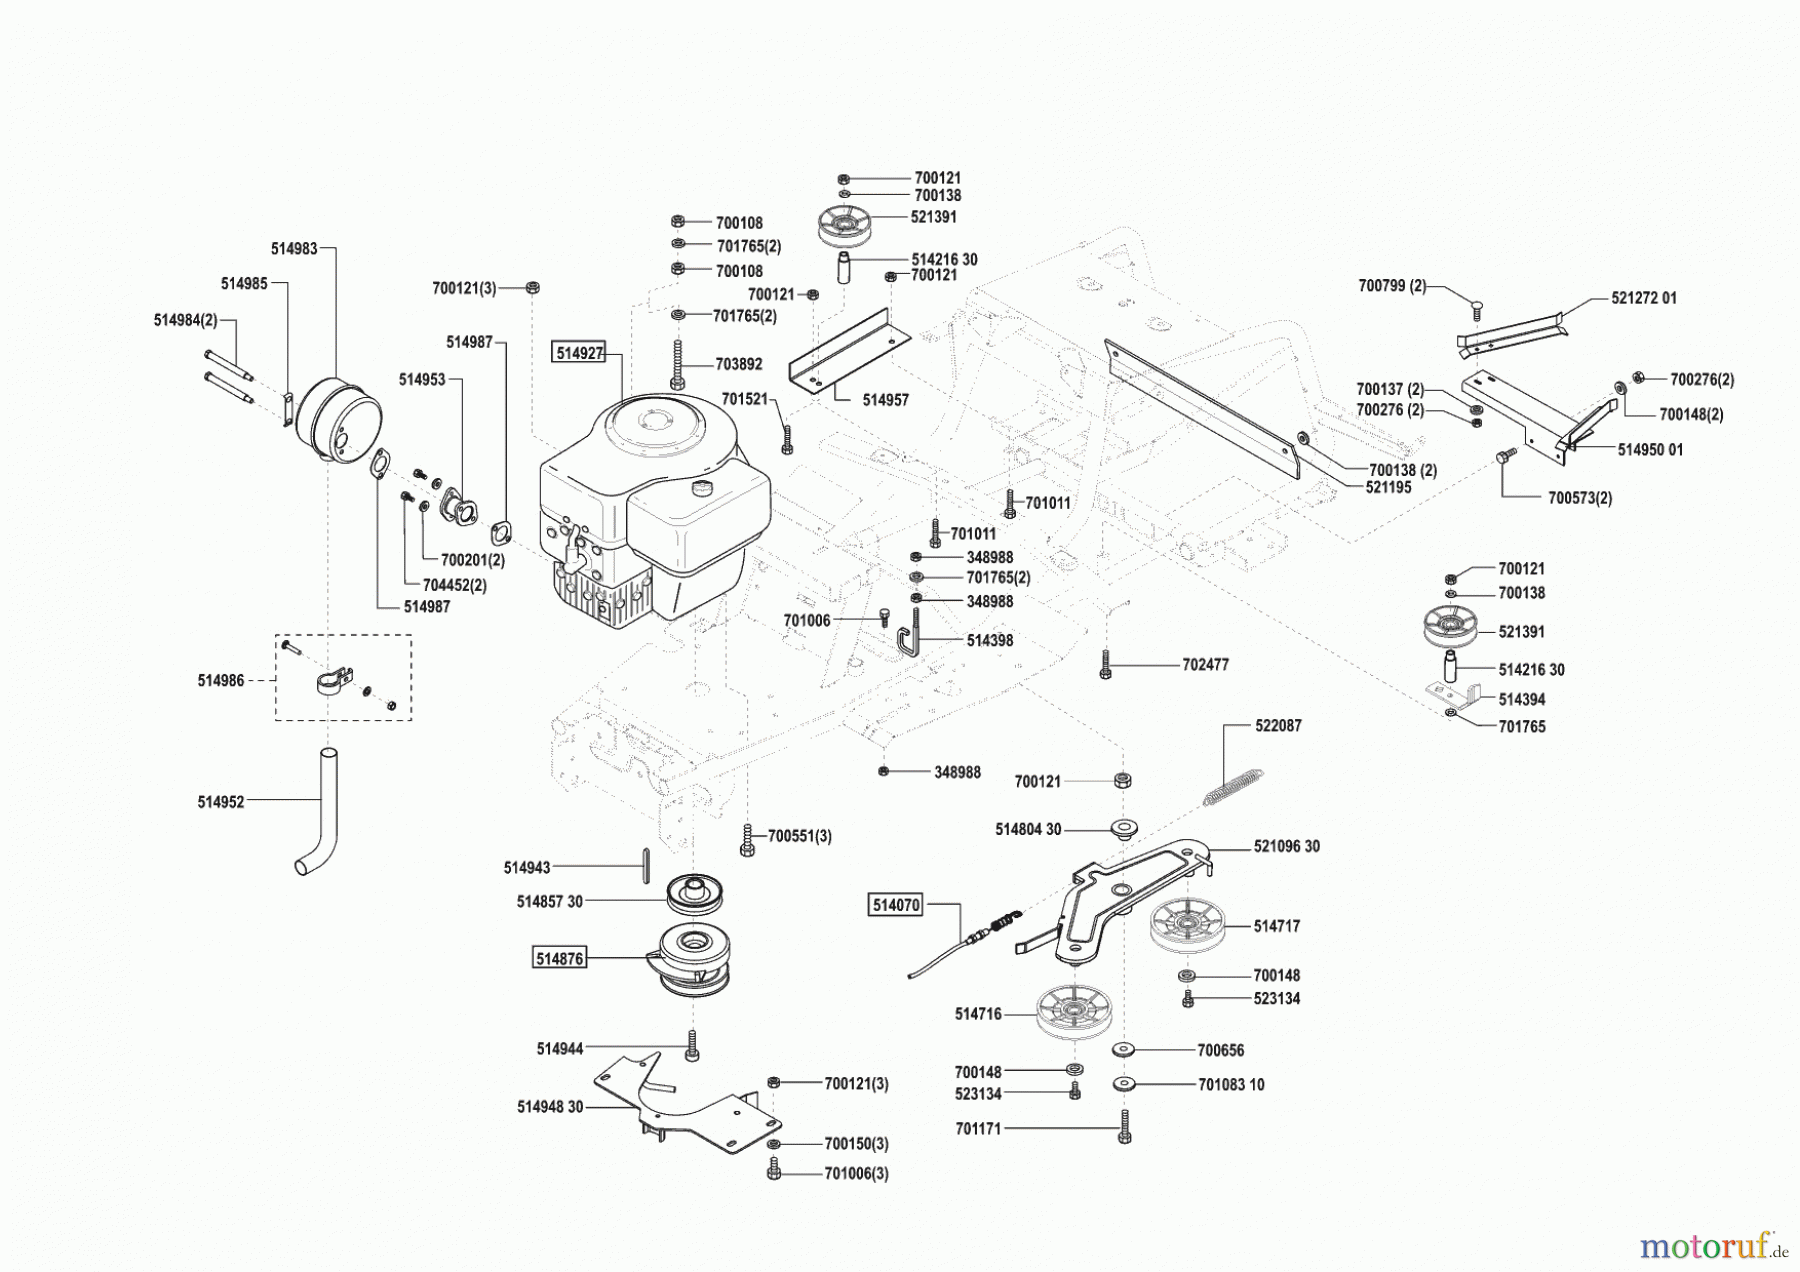  AL-KO Gartentechnik Rasentraktor T 17-102 HD ab 10/2001 Seite 4